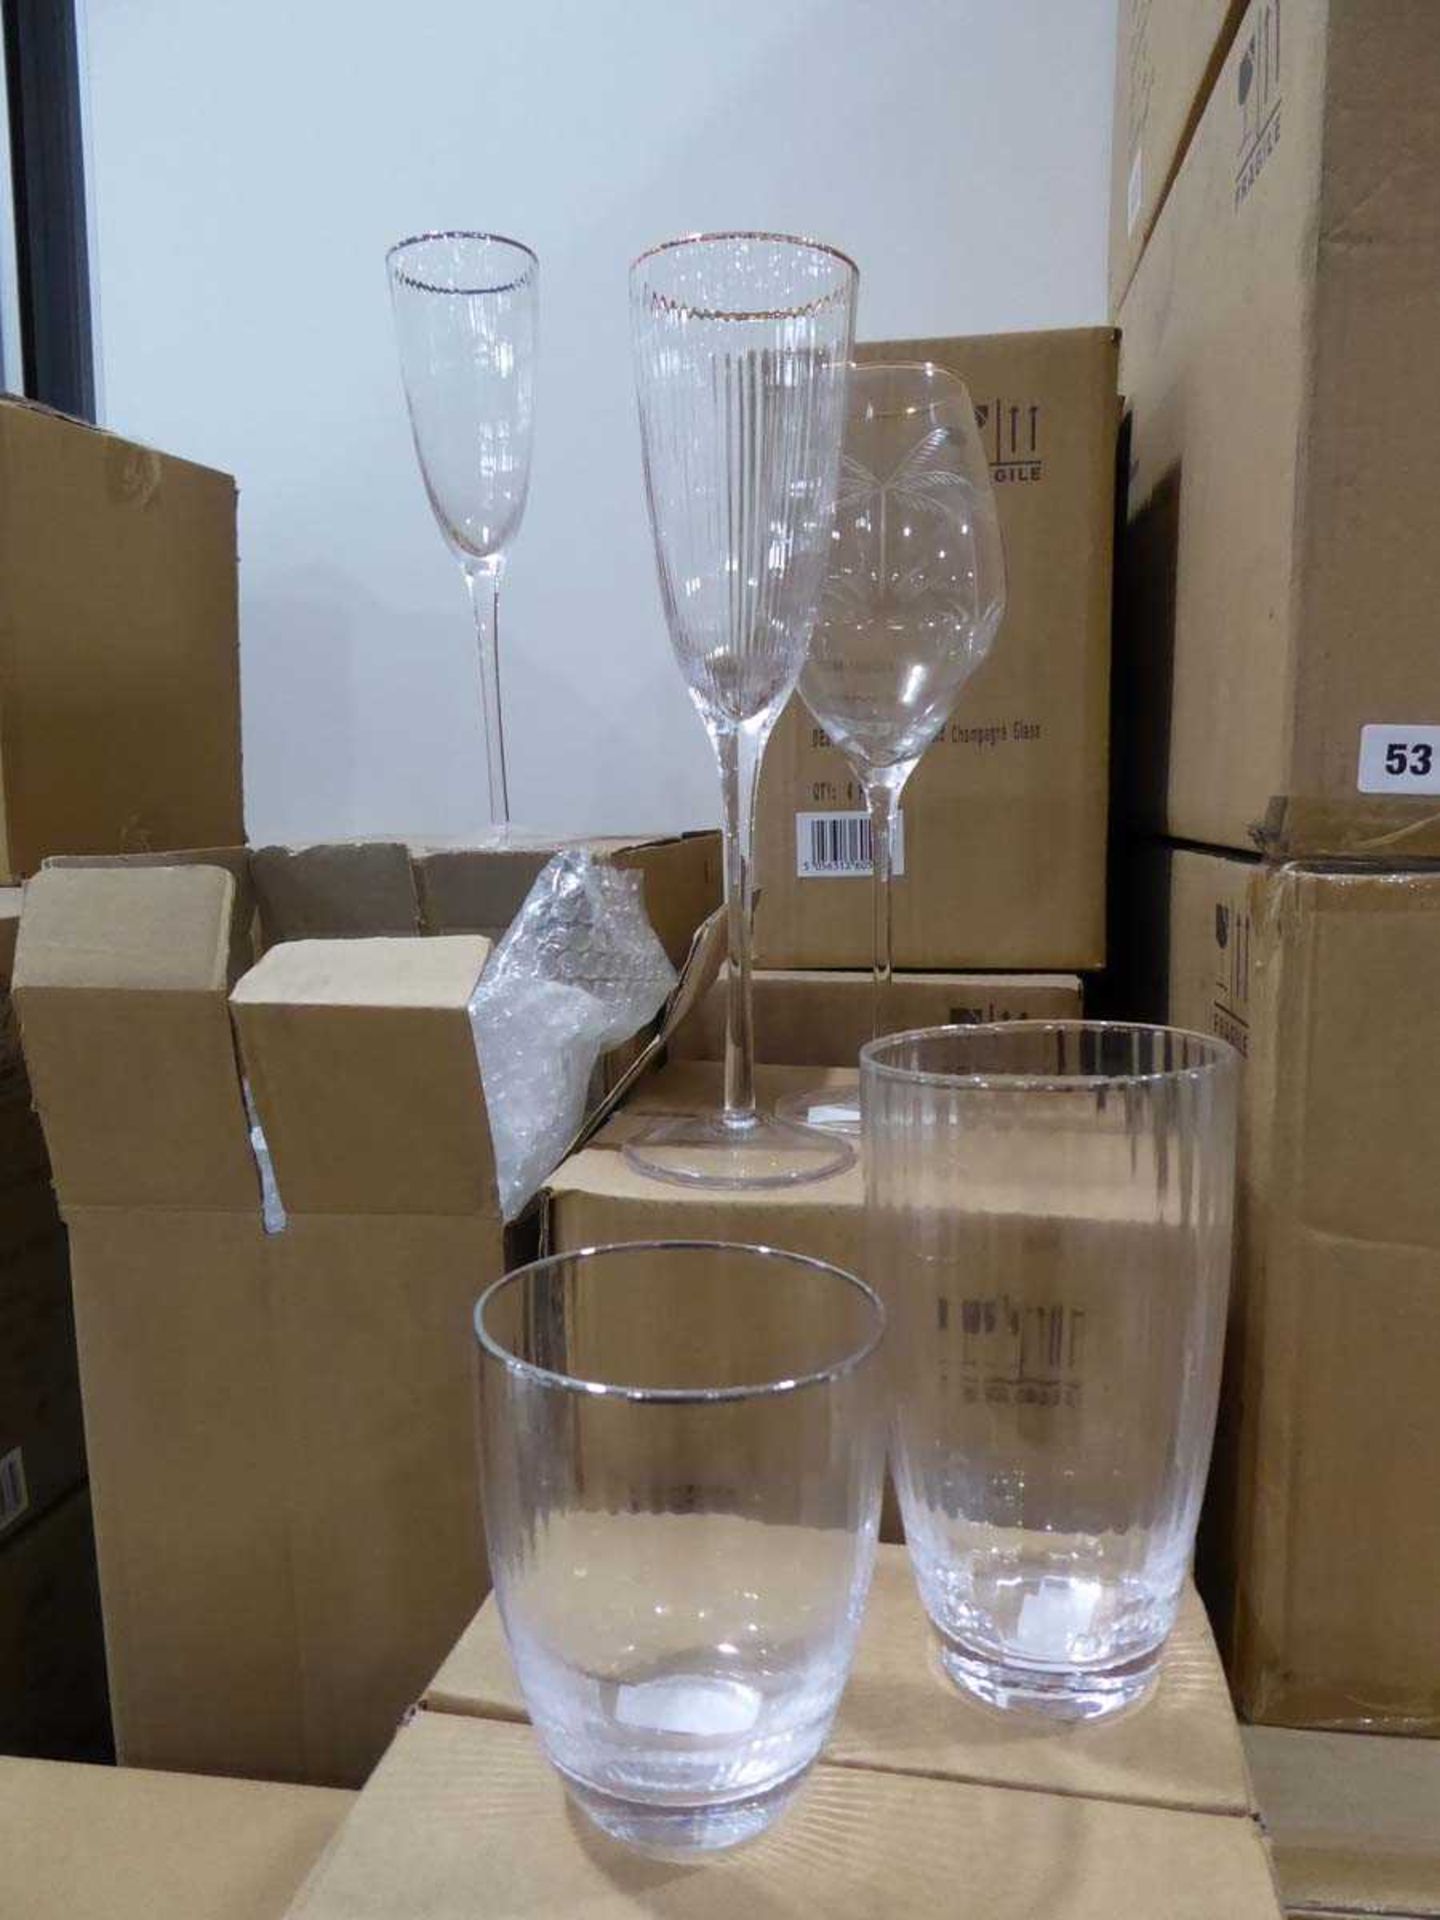 +VAT Large quantity of champagne glasses, flute glasses, wine glasses etc - Image 2 of 4